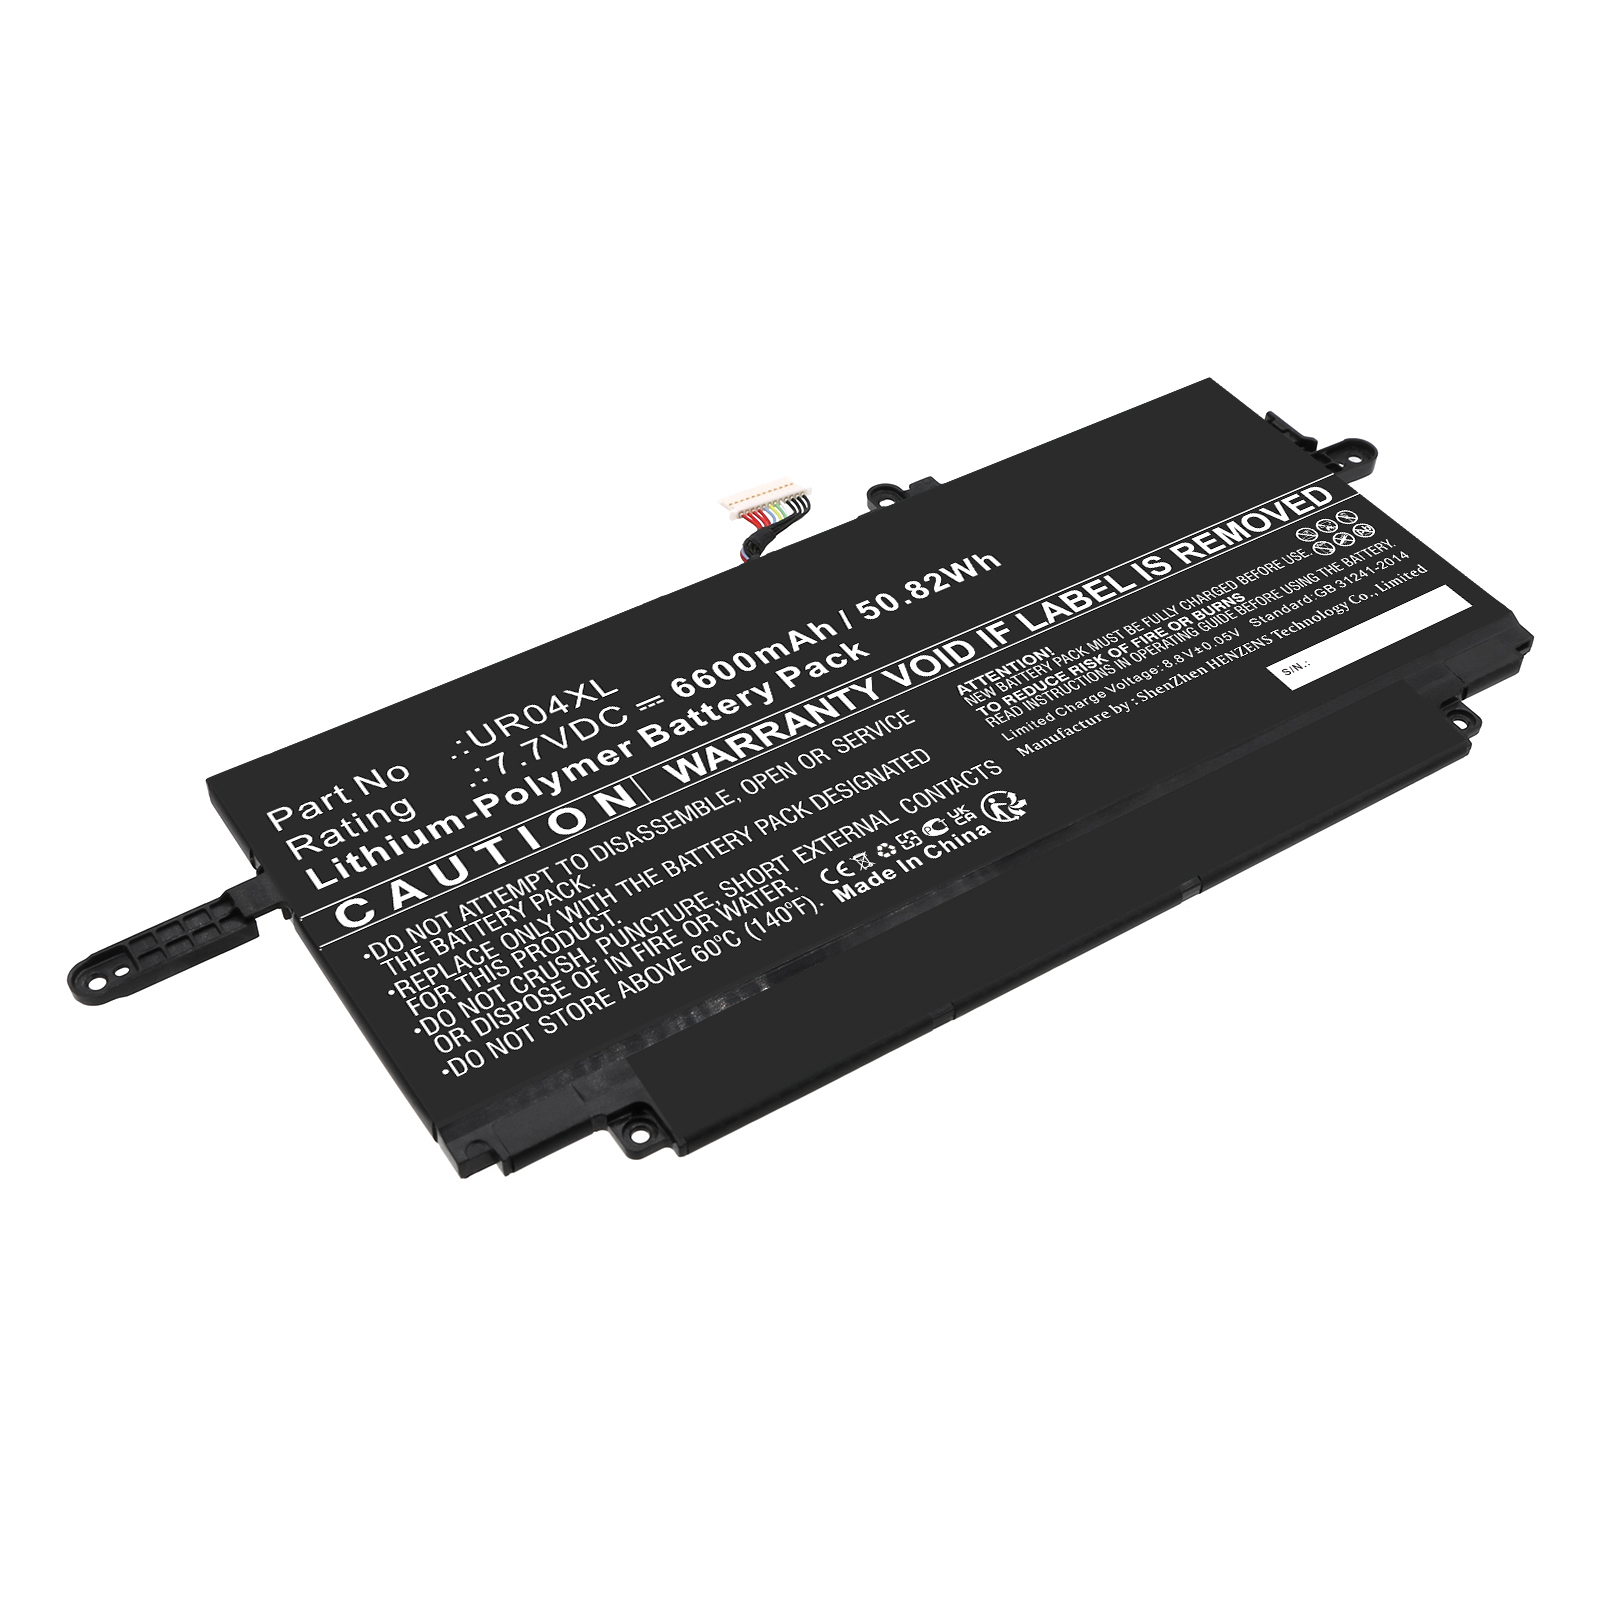 Synergy Digital Laptop Battery, Compatible with HP M90785-2C1 Laptop Battery (Li-Pol, 7.7V, 6600mAh)